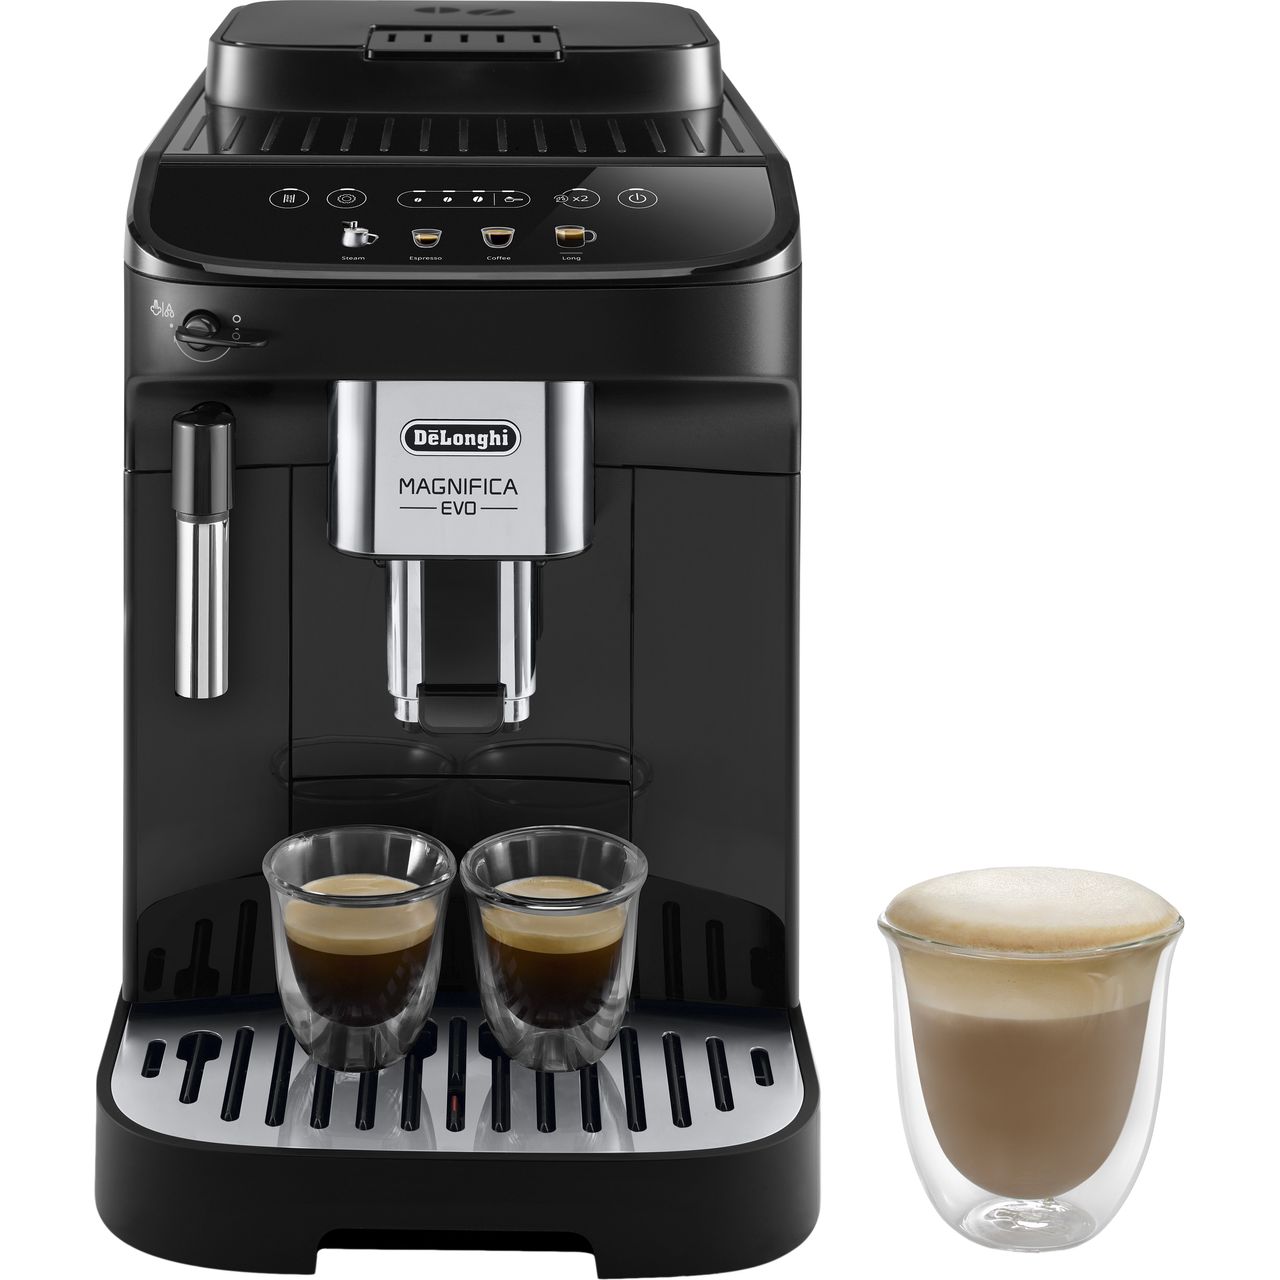 De'Longhi Autentica, Automatic Bean to Cup Coffee Machine